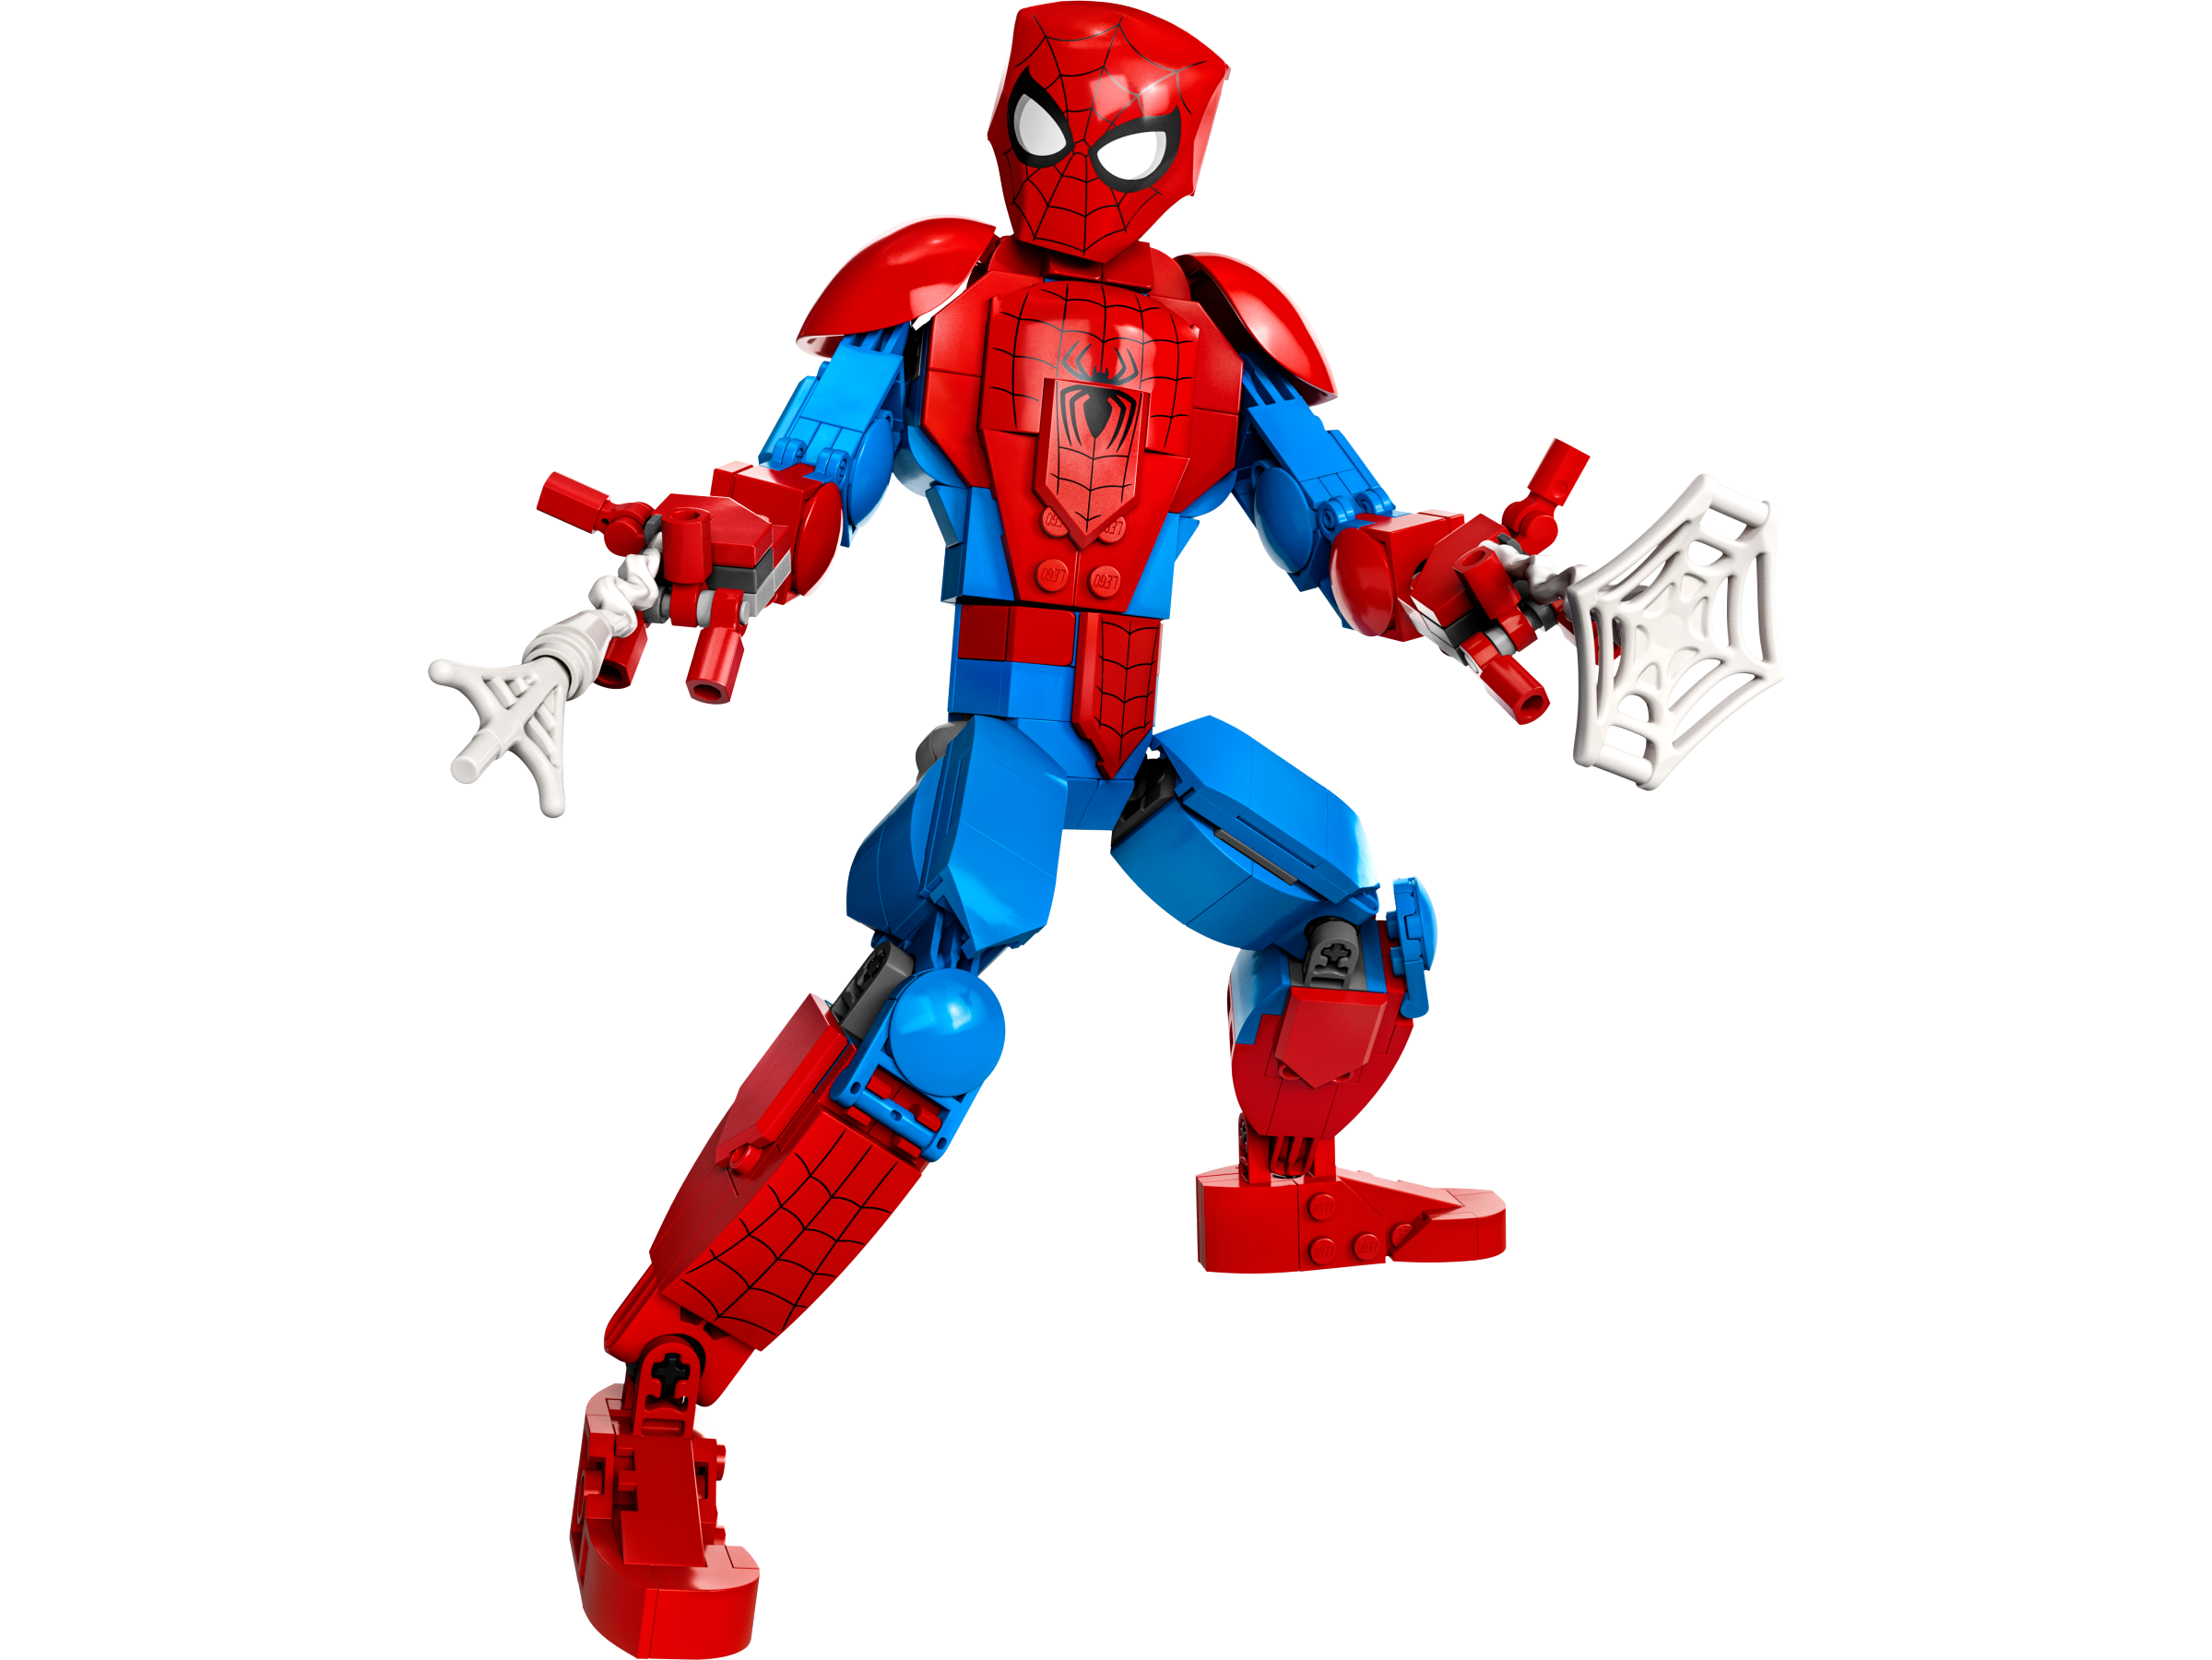 LEGO®MARVEL SUPER HEROES 76226 - FIGURINE DE SPIDERMAN